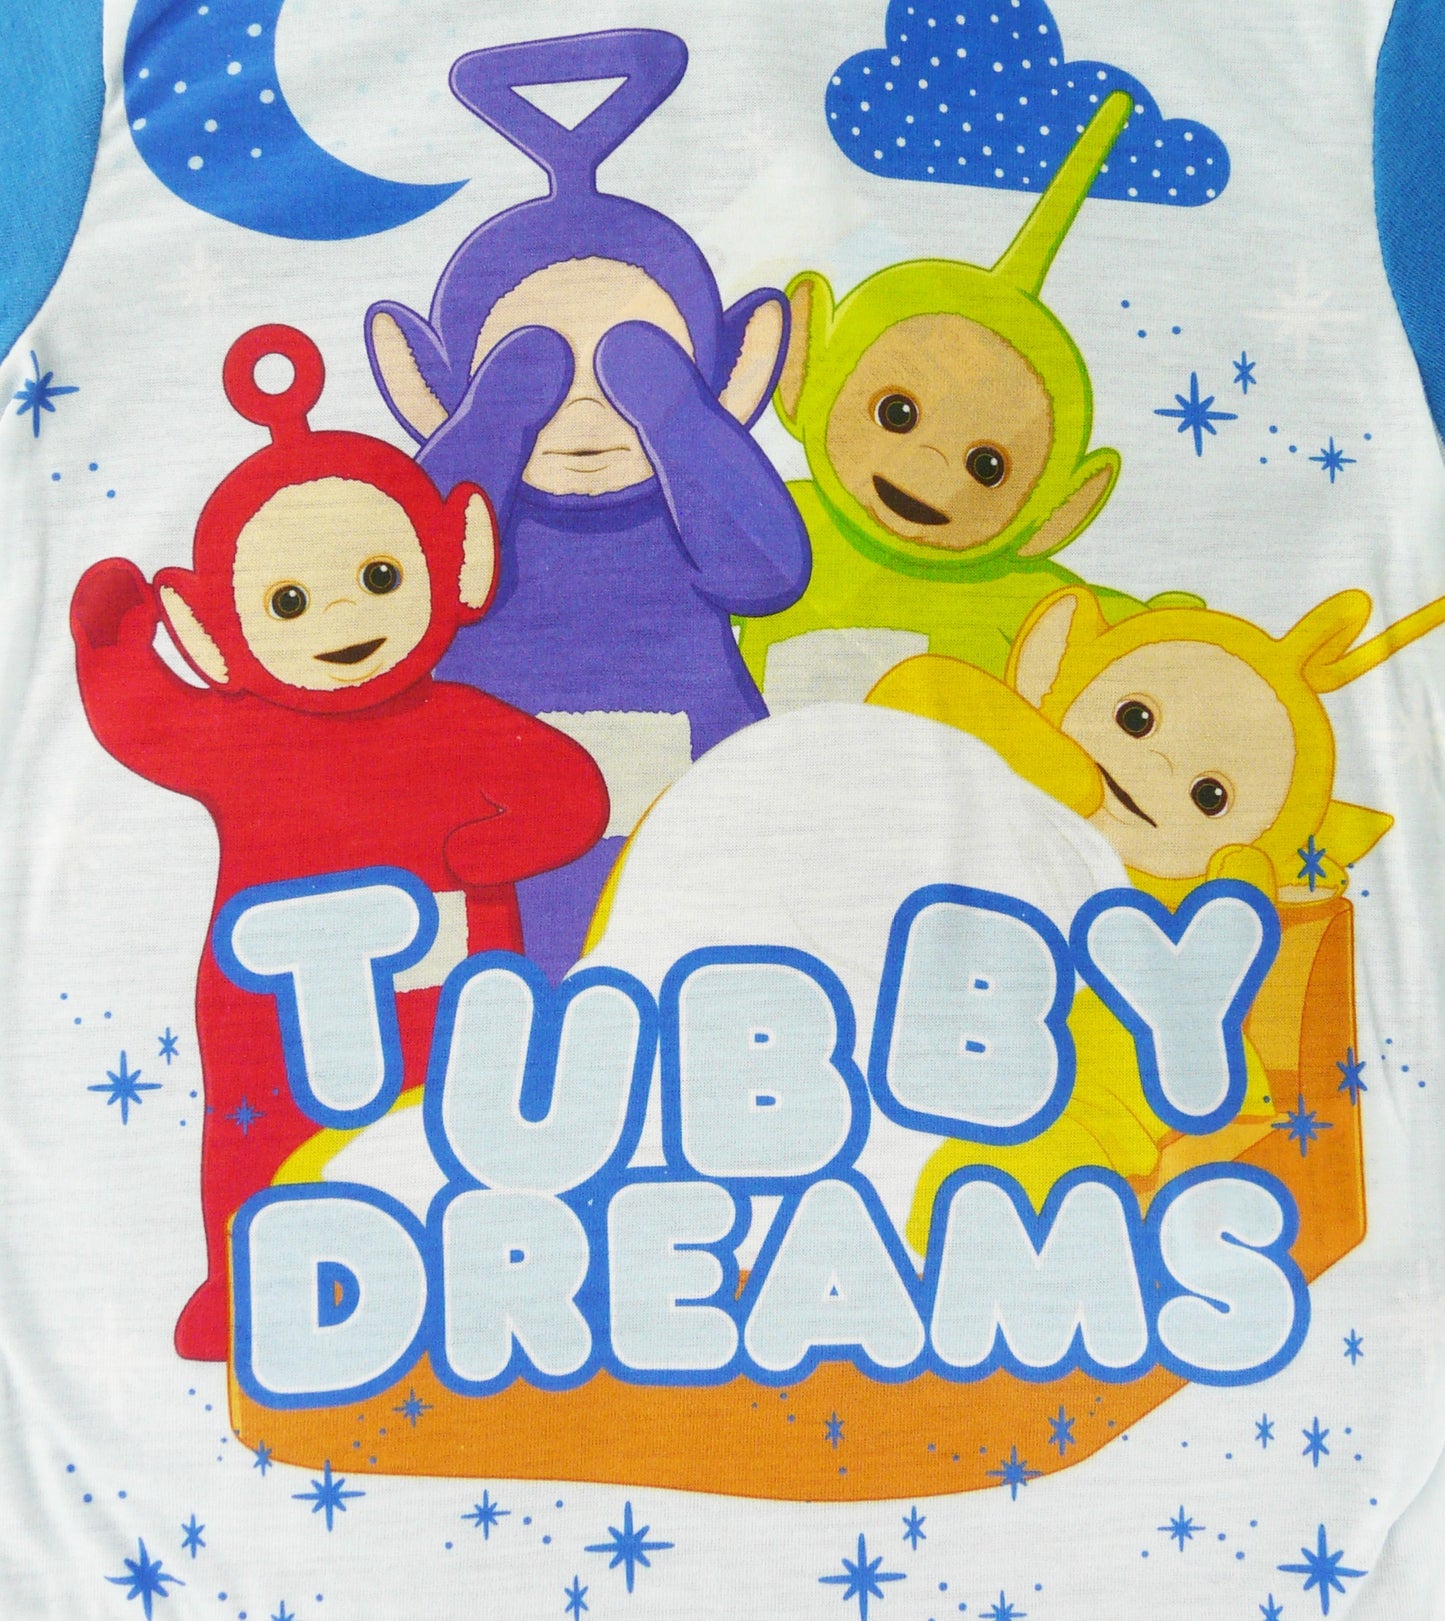 Teletubbies "Tubby Dream" Boys Pyjamas